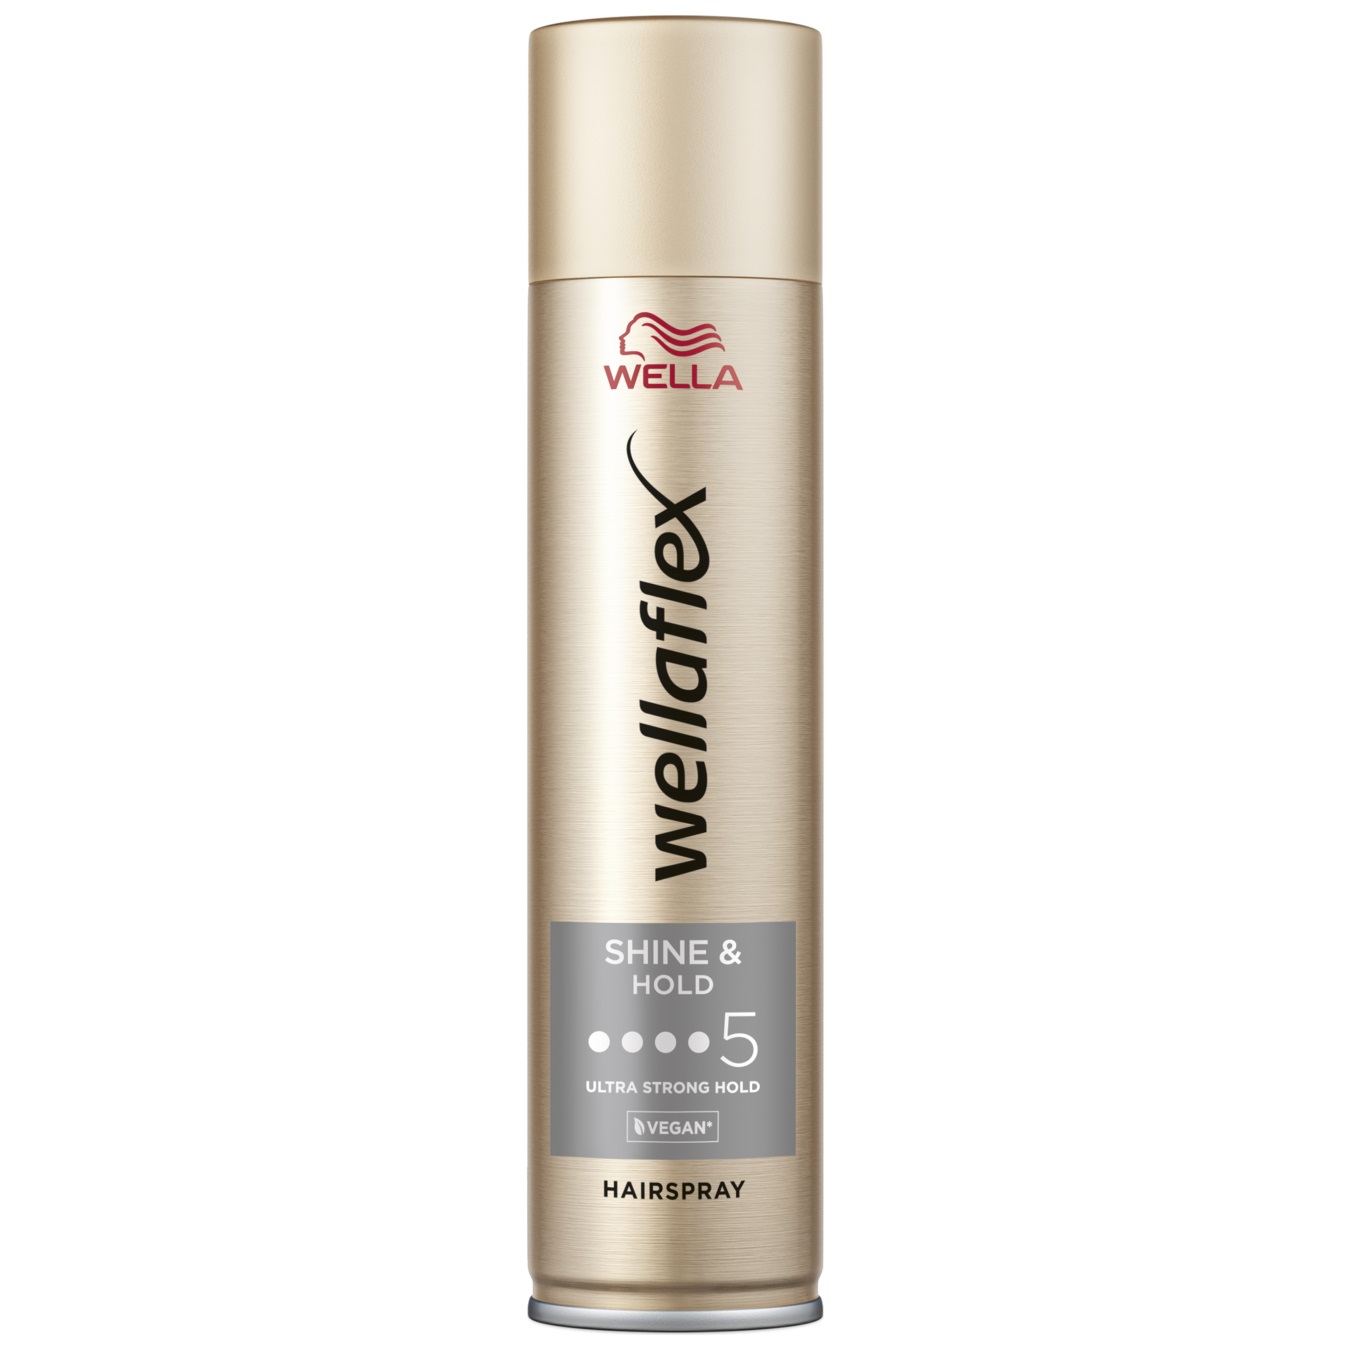 Hairspray WELLAFLEX SHINE AND FIXATION (5) 250 ml